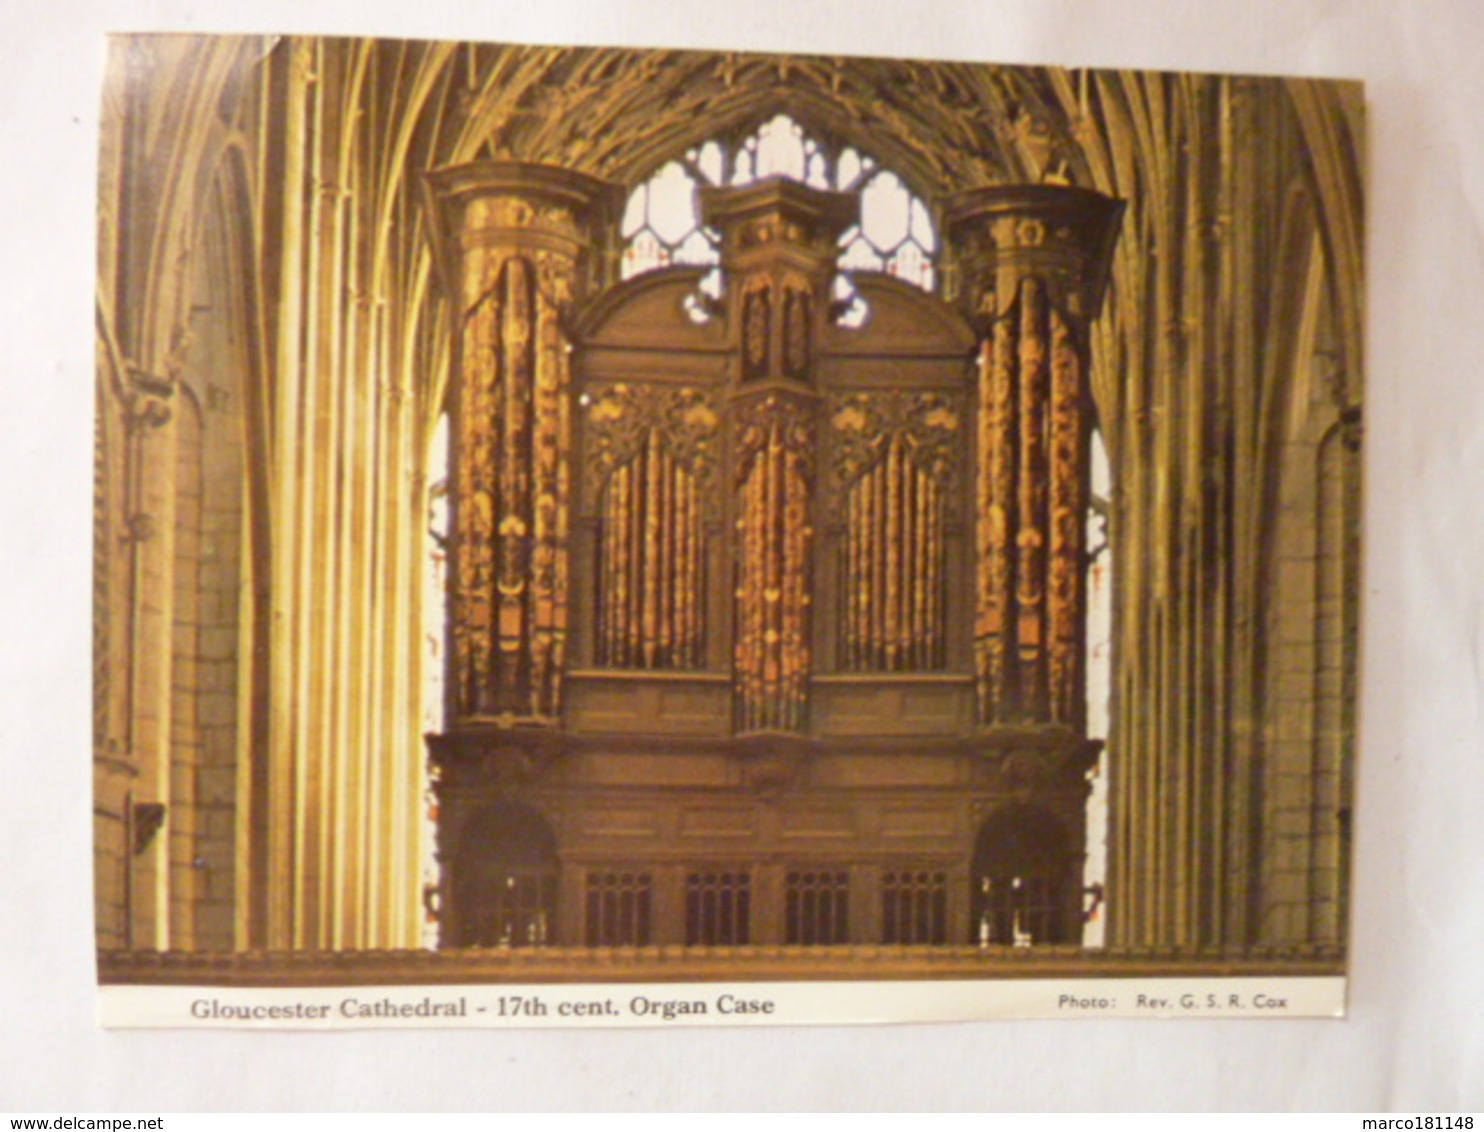 Gloucester Cathedral - Organ Case - Gloucester